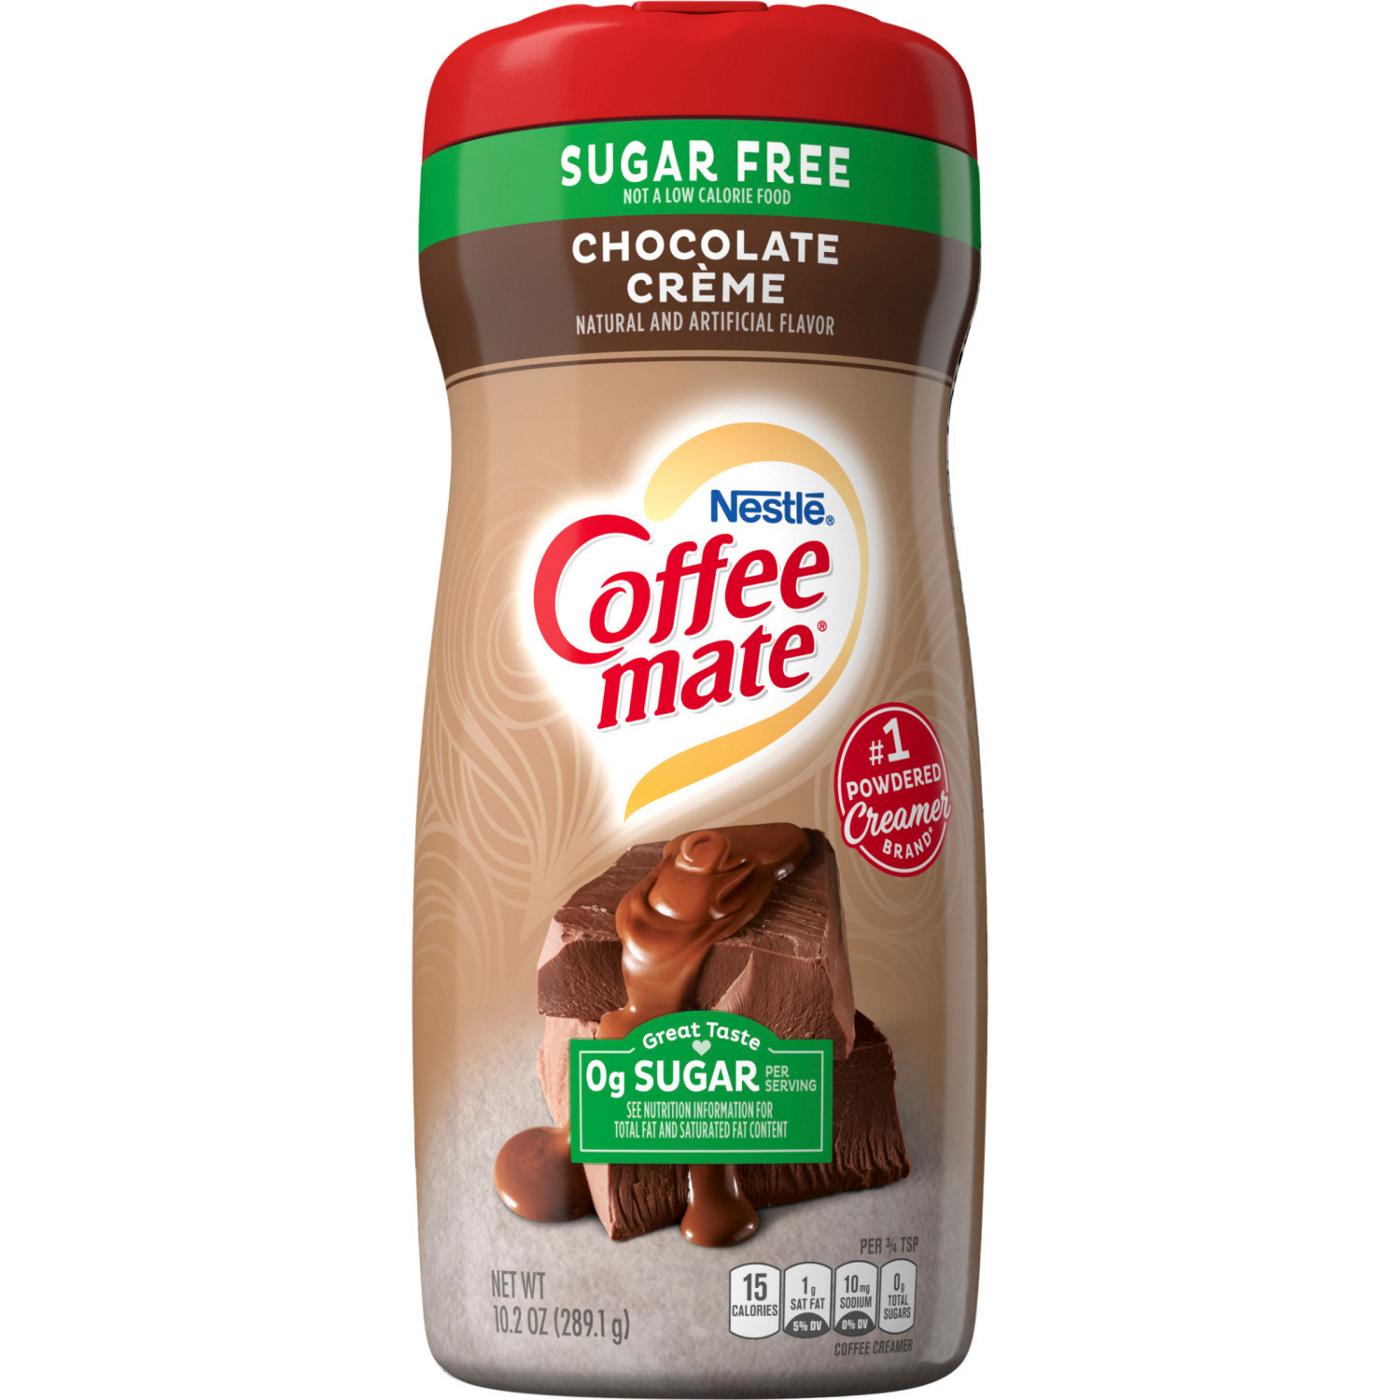 Nestle Coffee Mate Sugar Free Chocolate Creme Powder Coffee Creamer; image 1 of 4